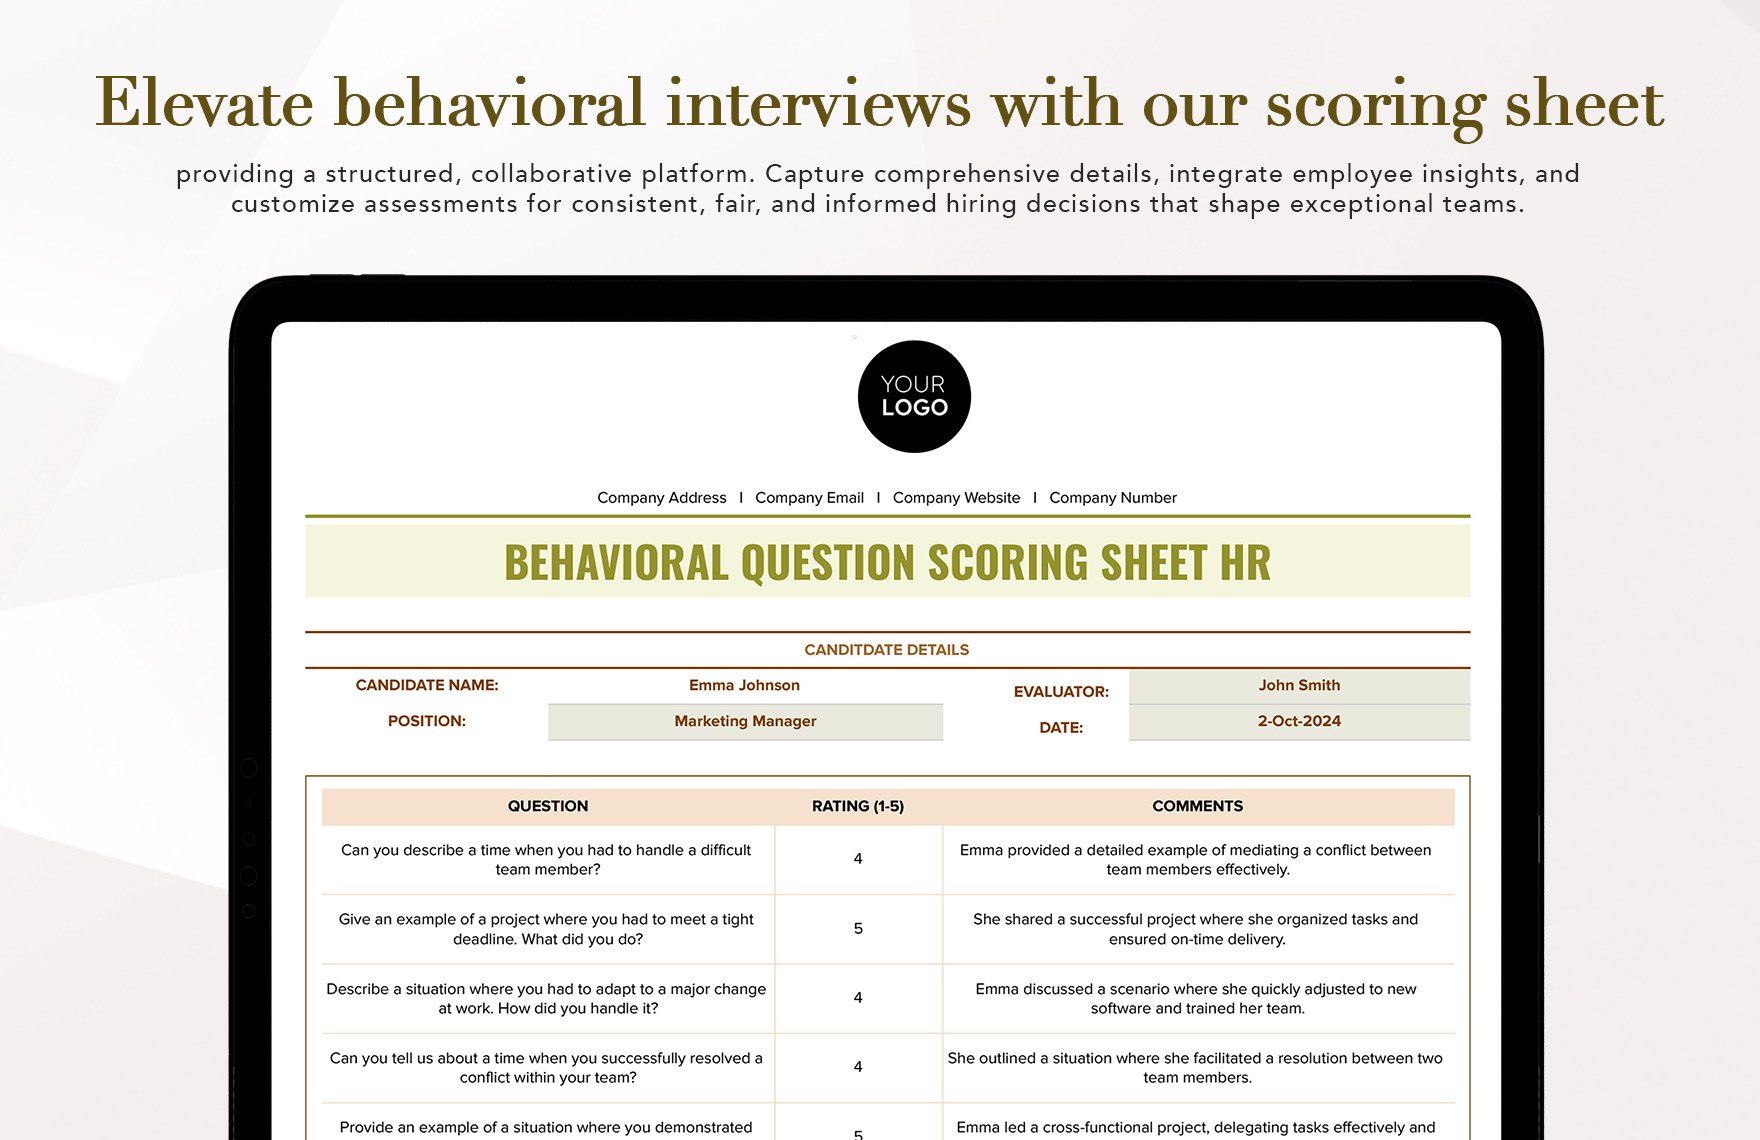 Behavioral Question Scoring Sheet HR Template